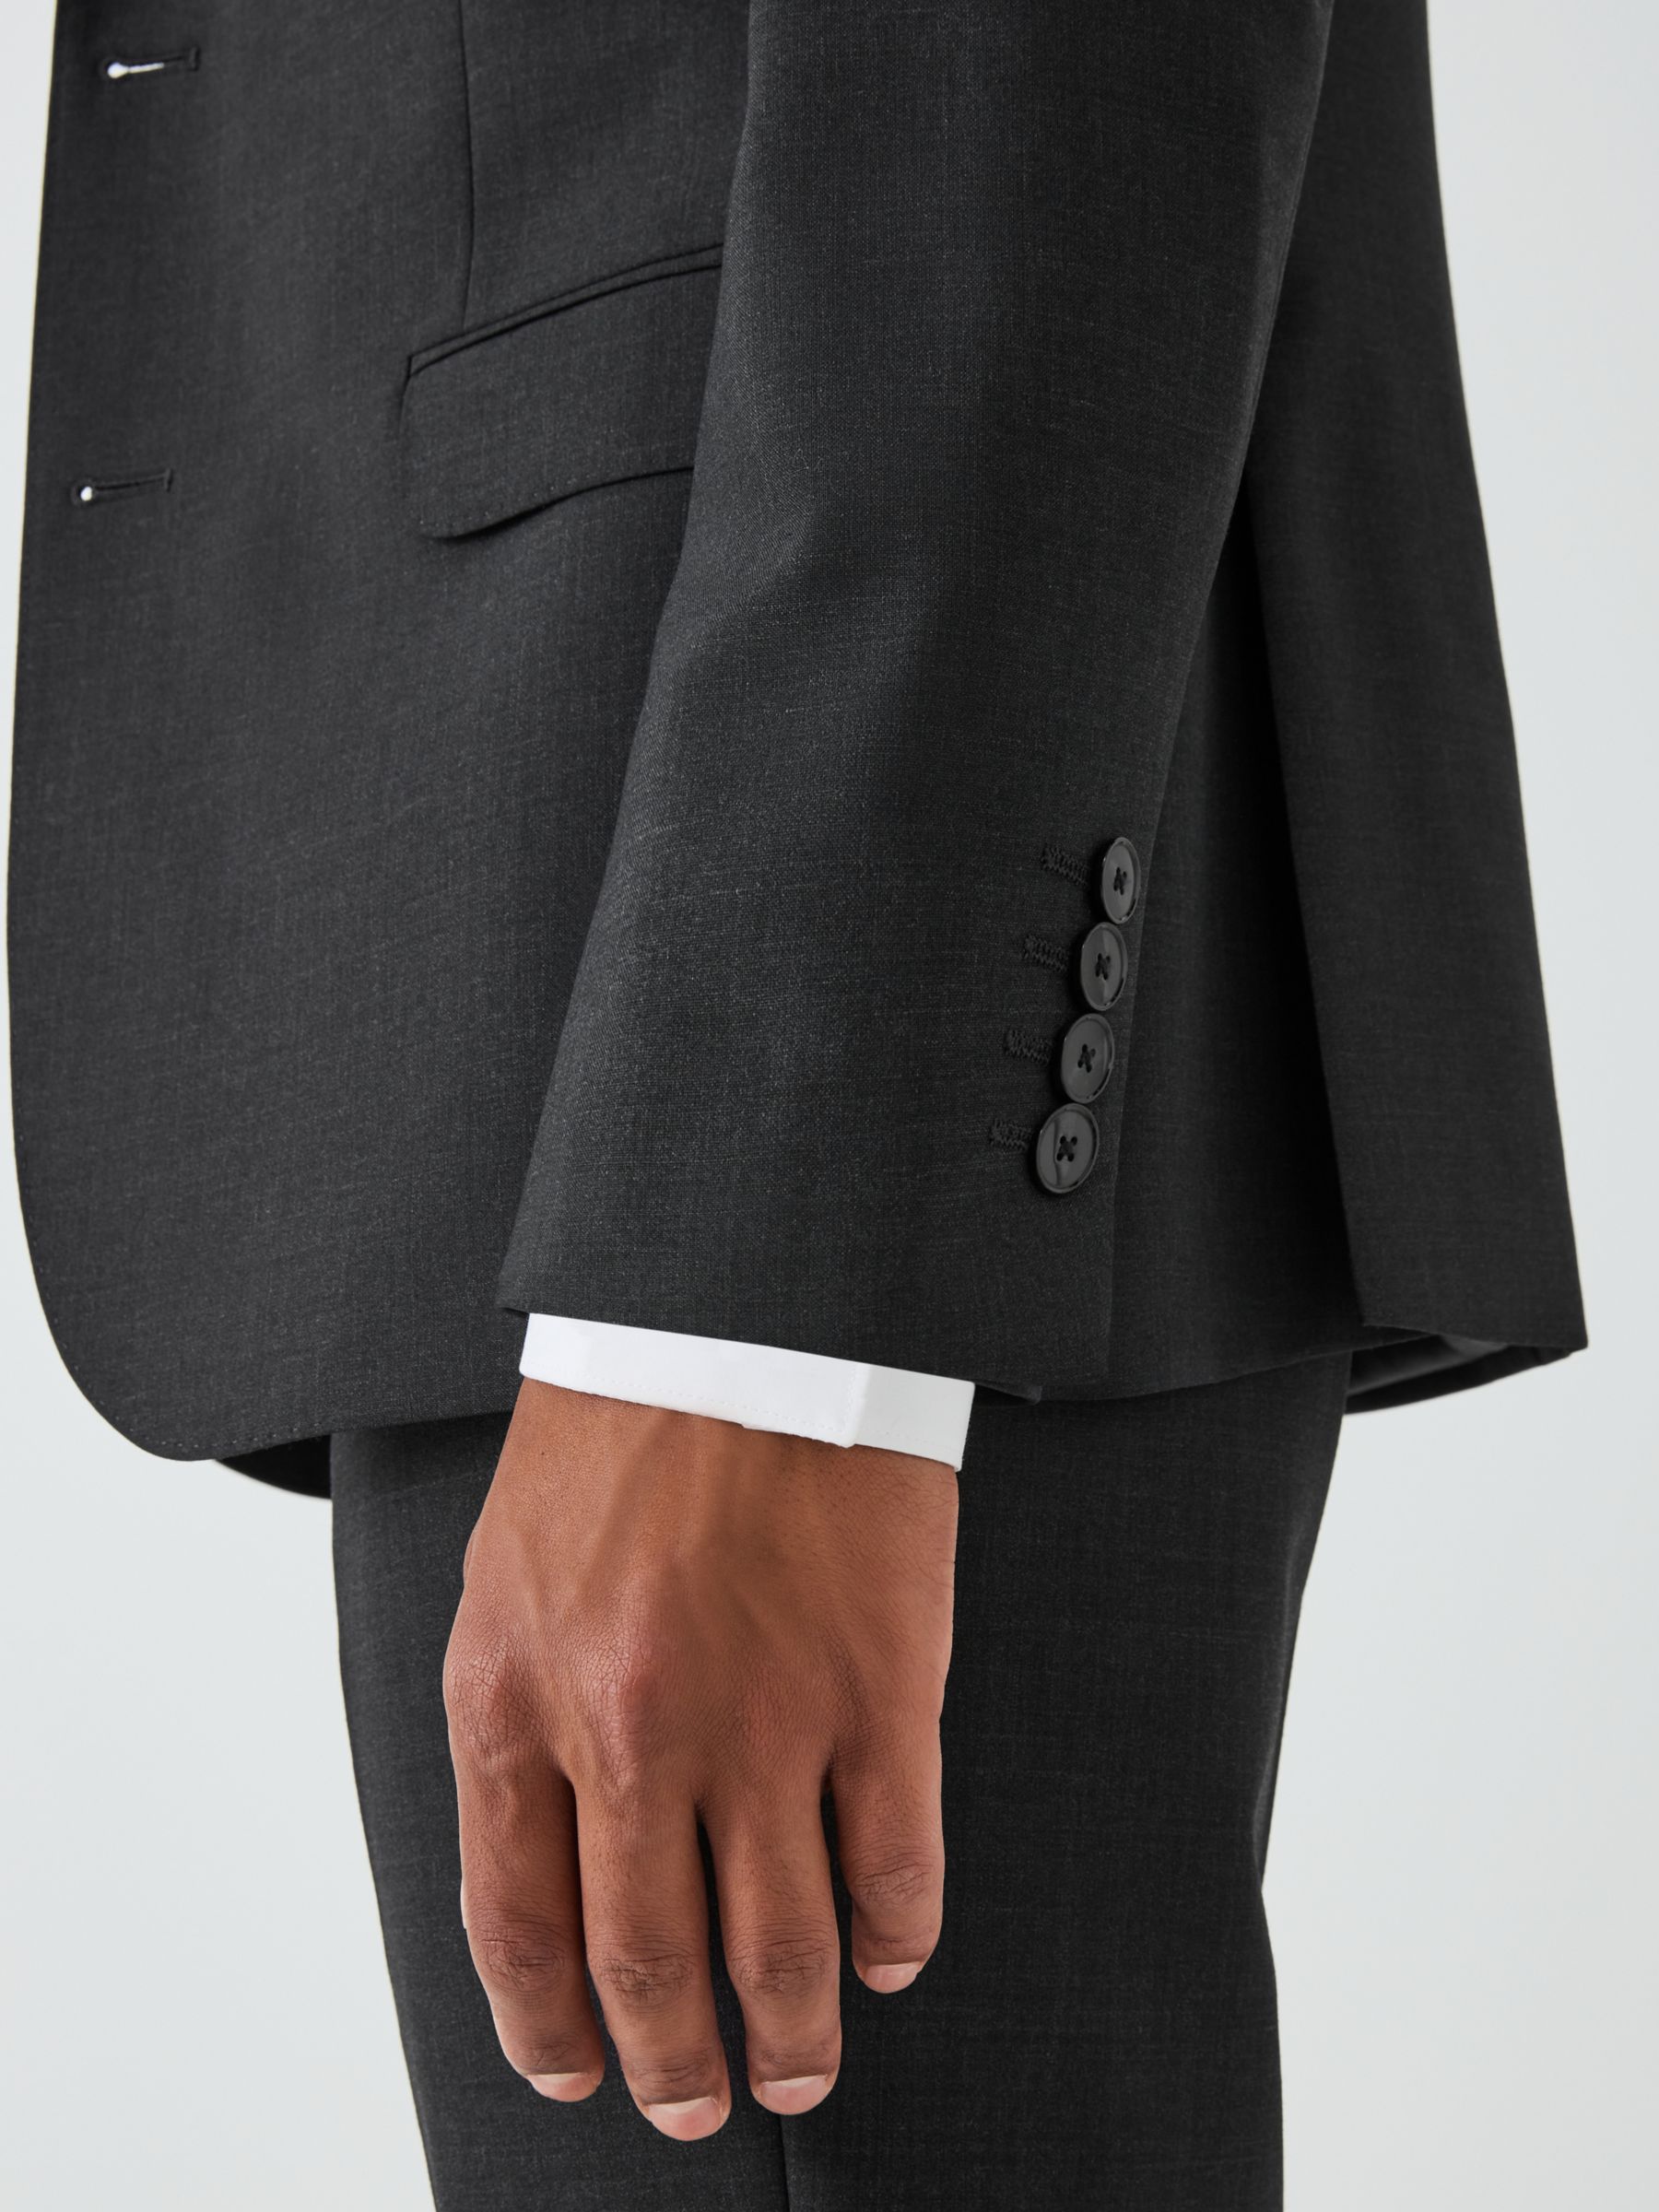 Kin Wool Blend Slim Fit Notch Lapel Suit Jacket, Charcoal at John Lewis ...